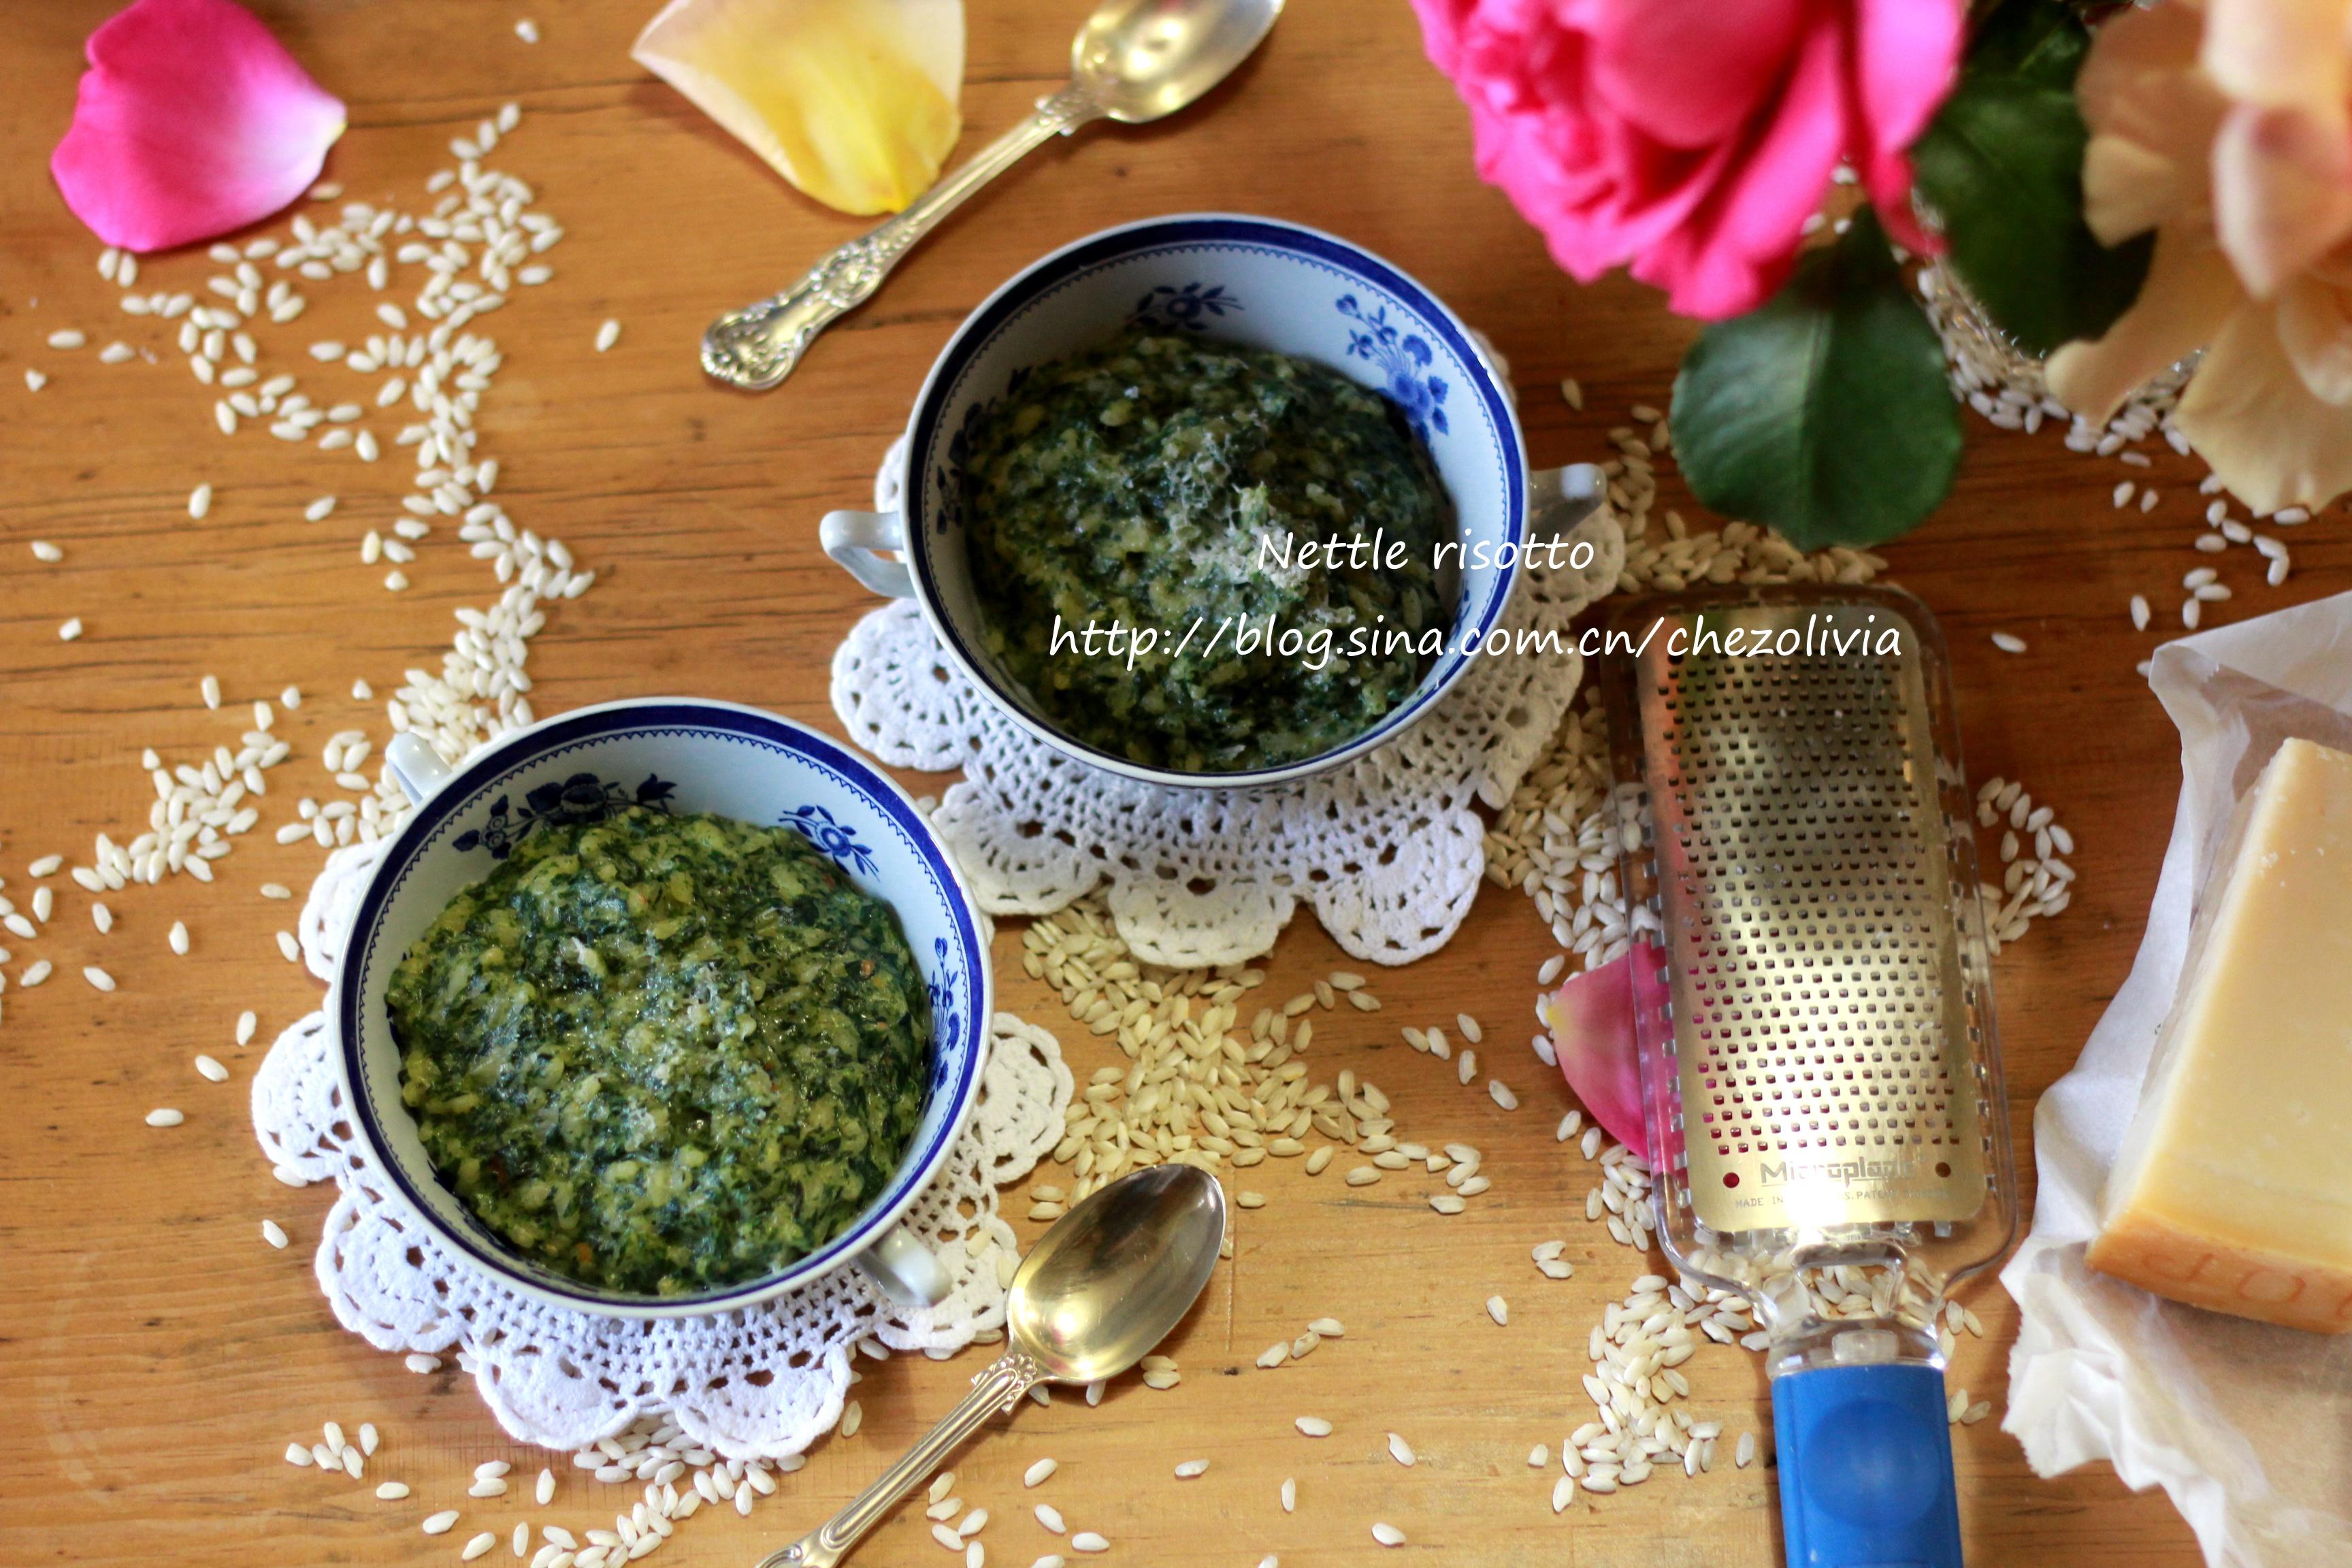 荨麻菜饭/nettle risotto的做法